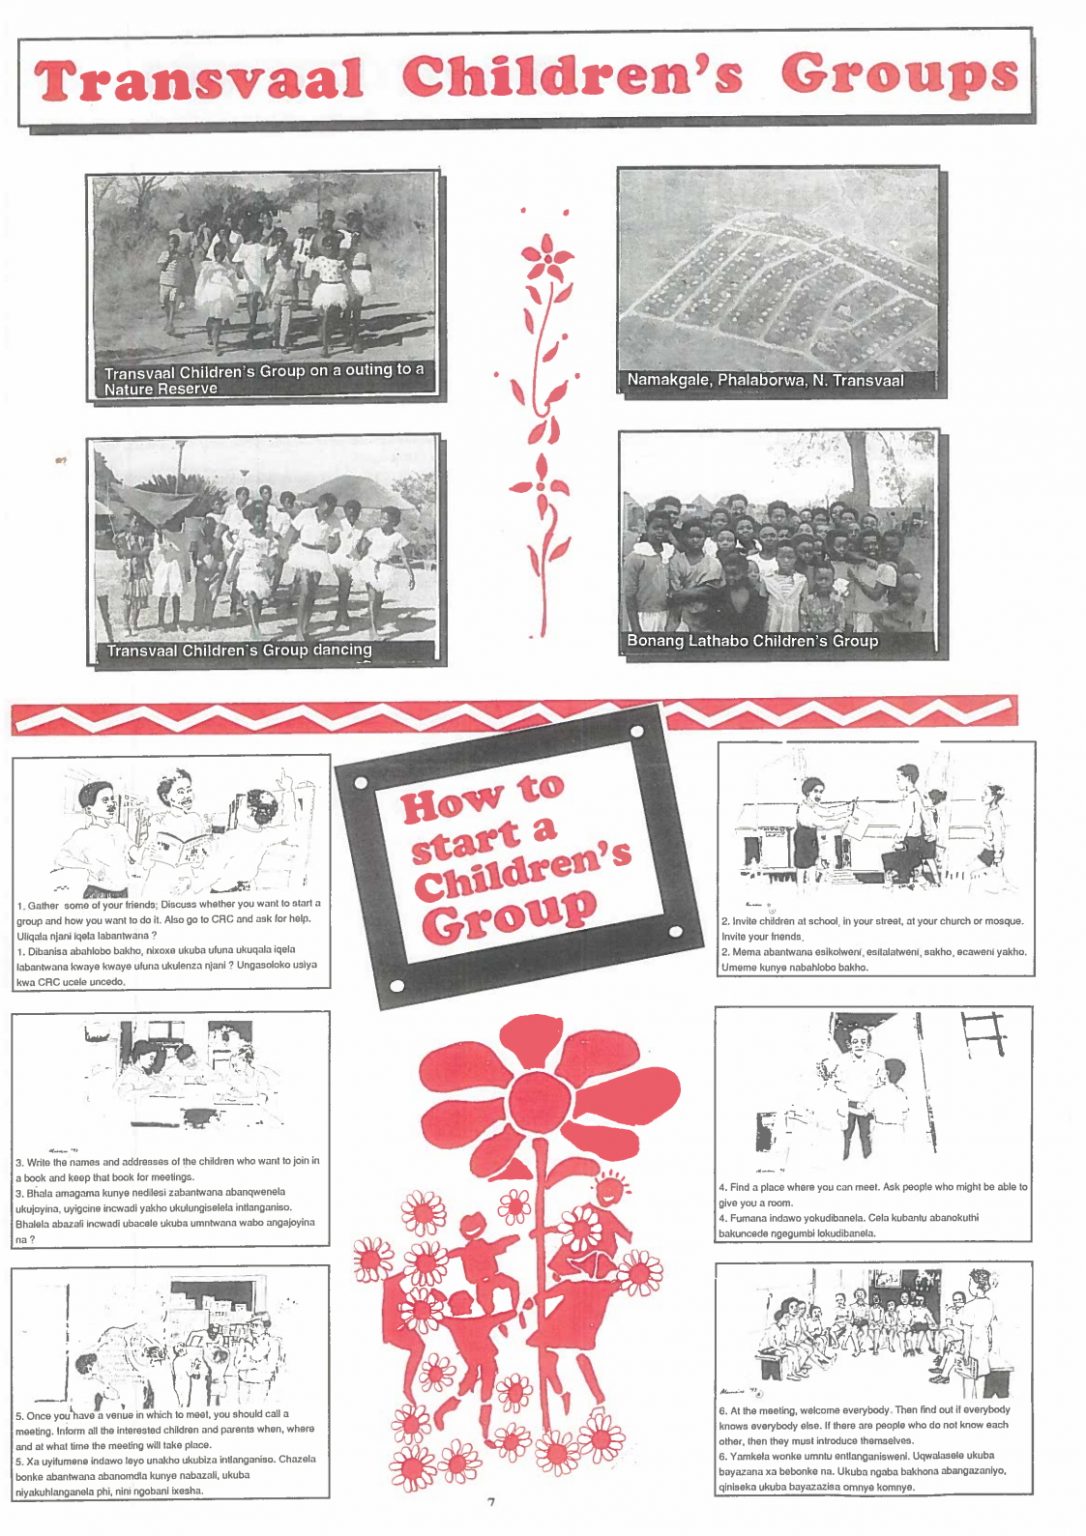 Article on Children's Groupsfrom Voice of the Children newsletter, June 1994.